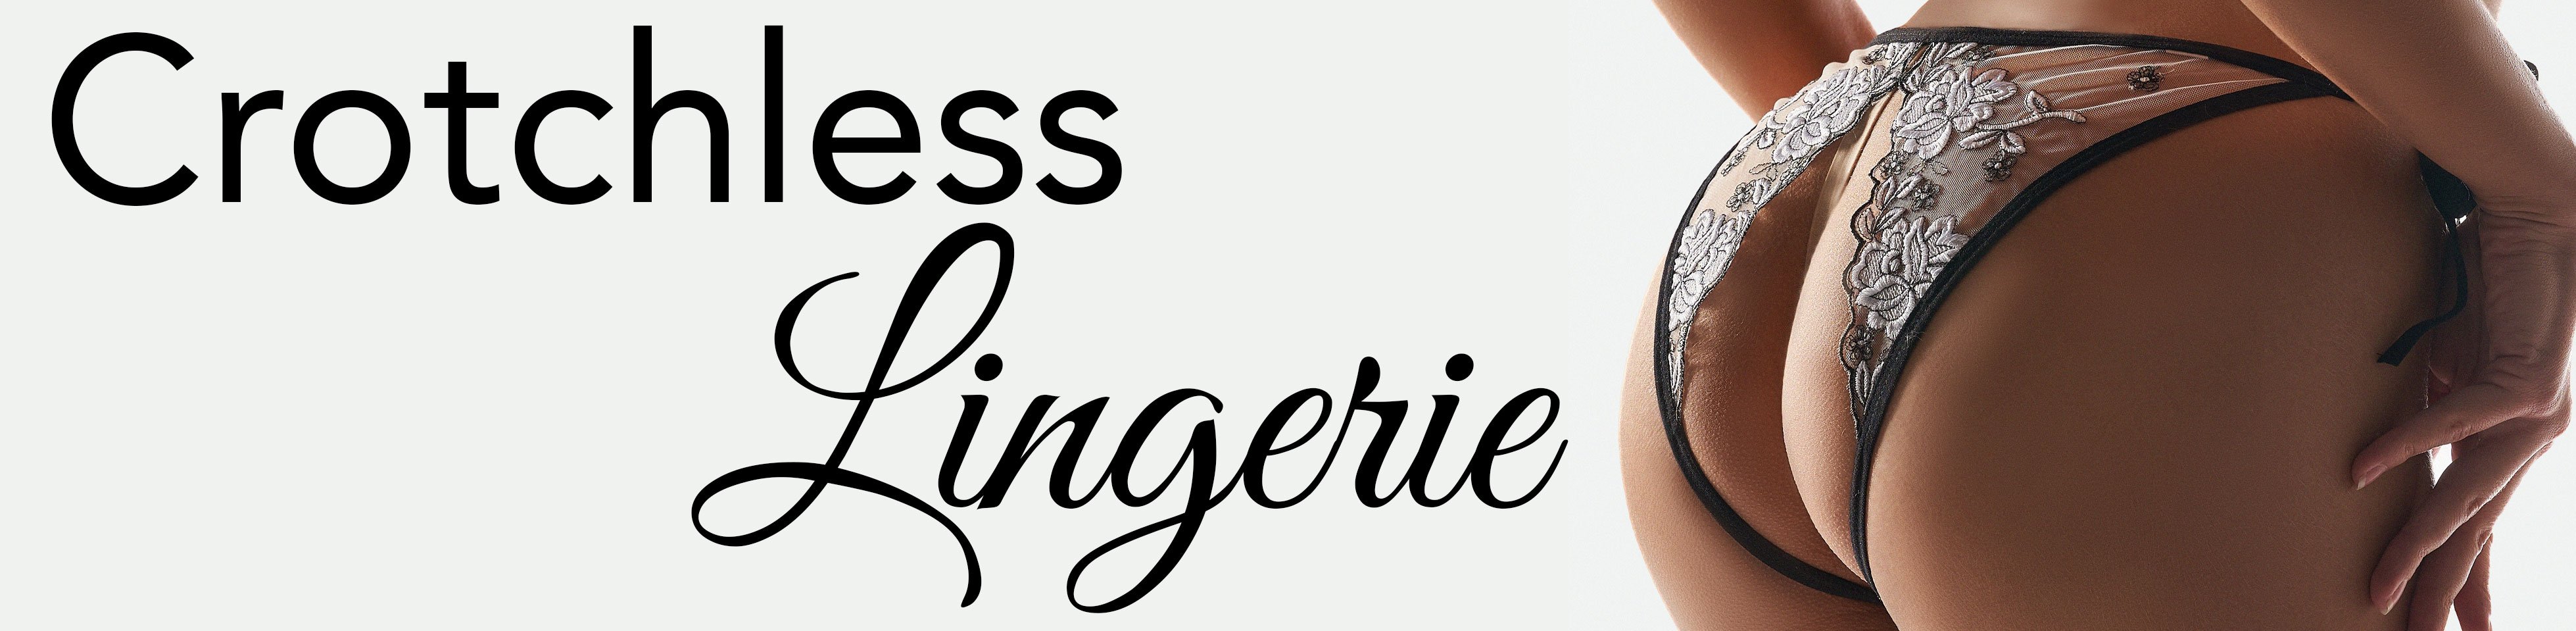 Crotchless Lingerie Header image 